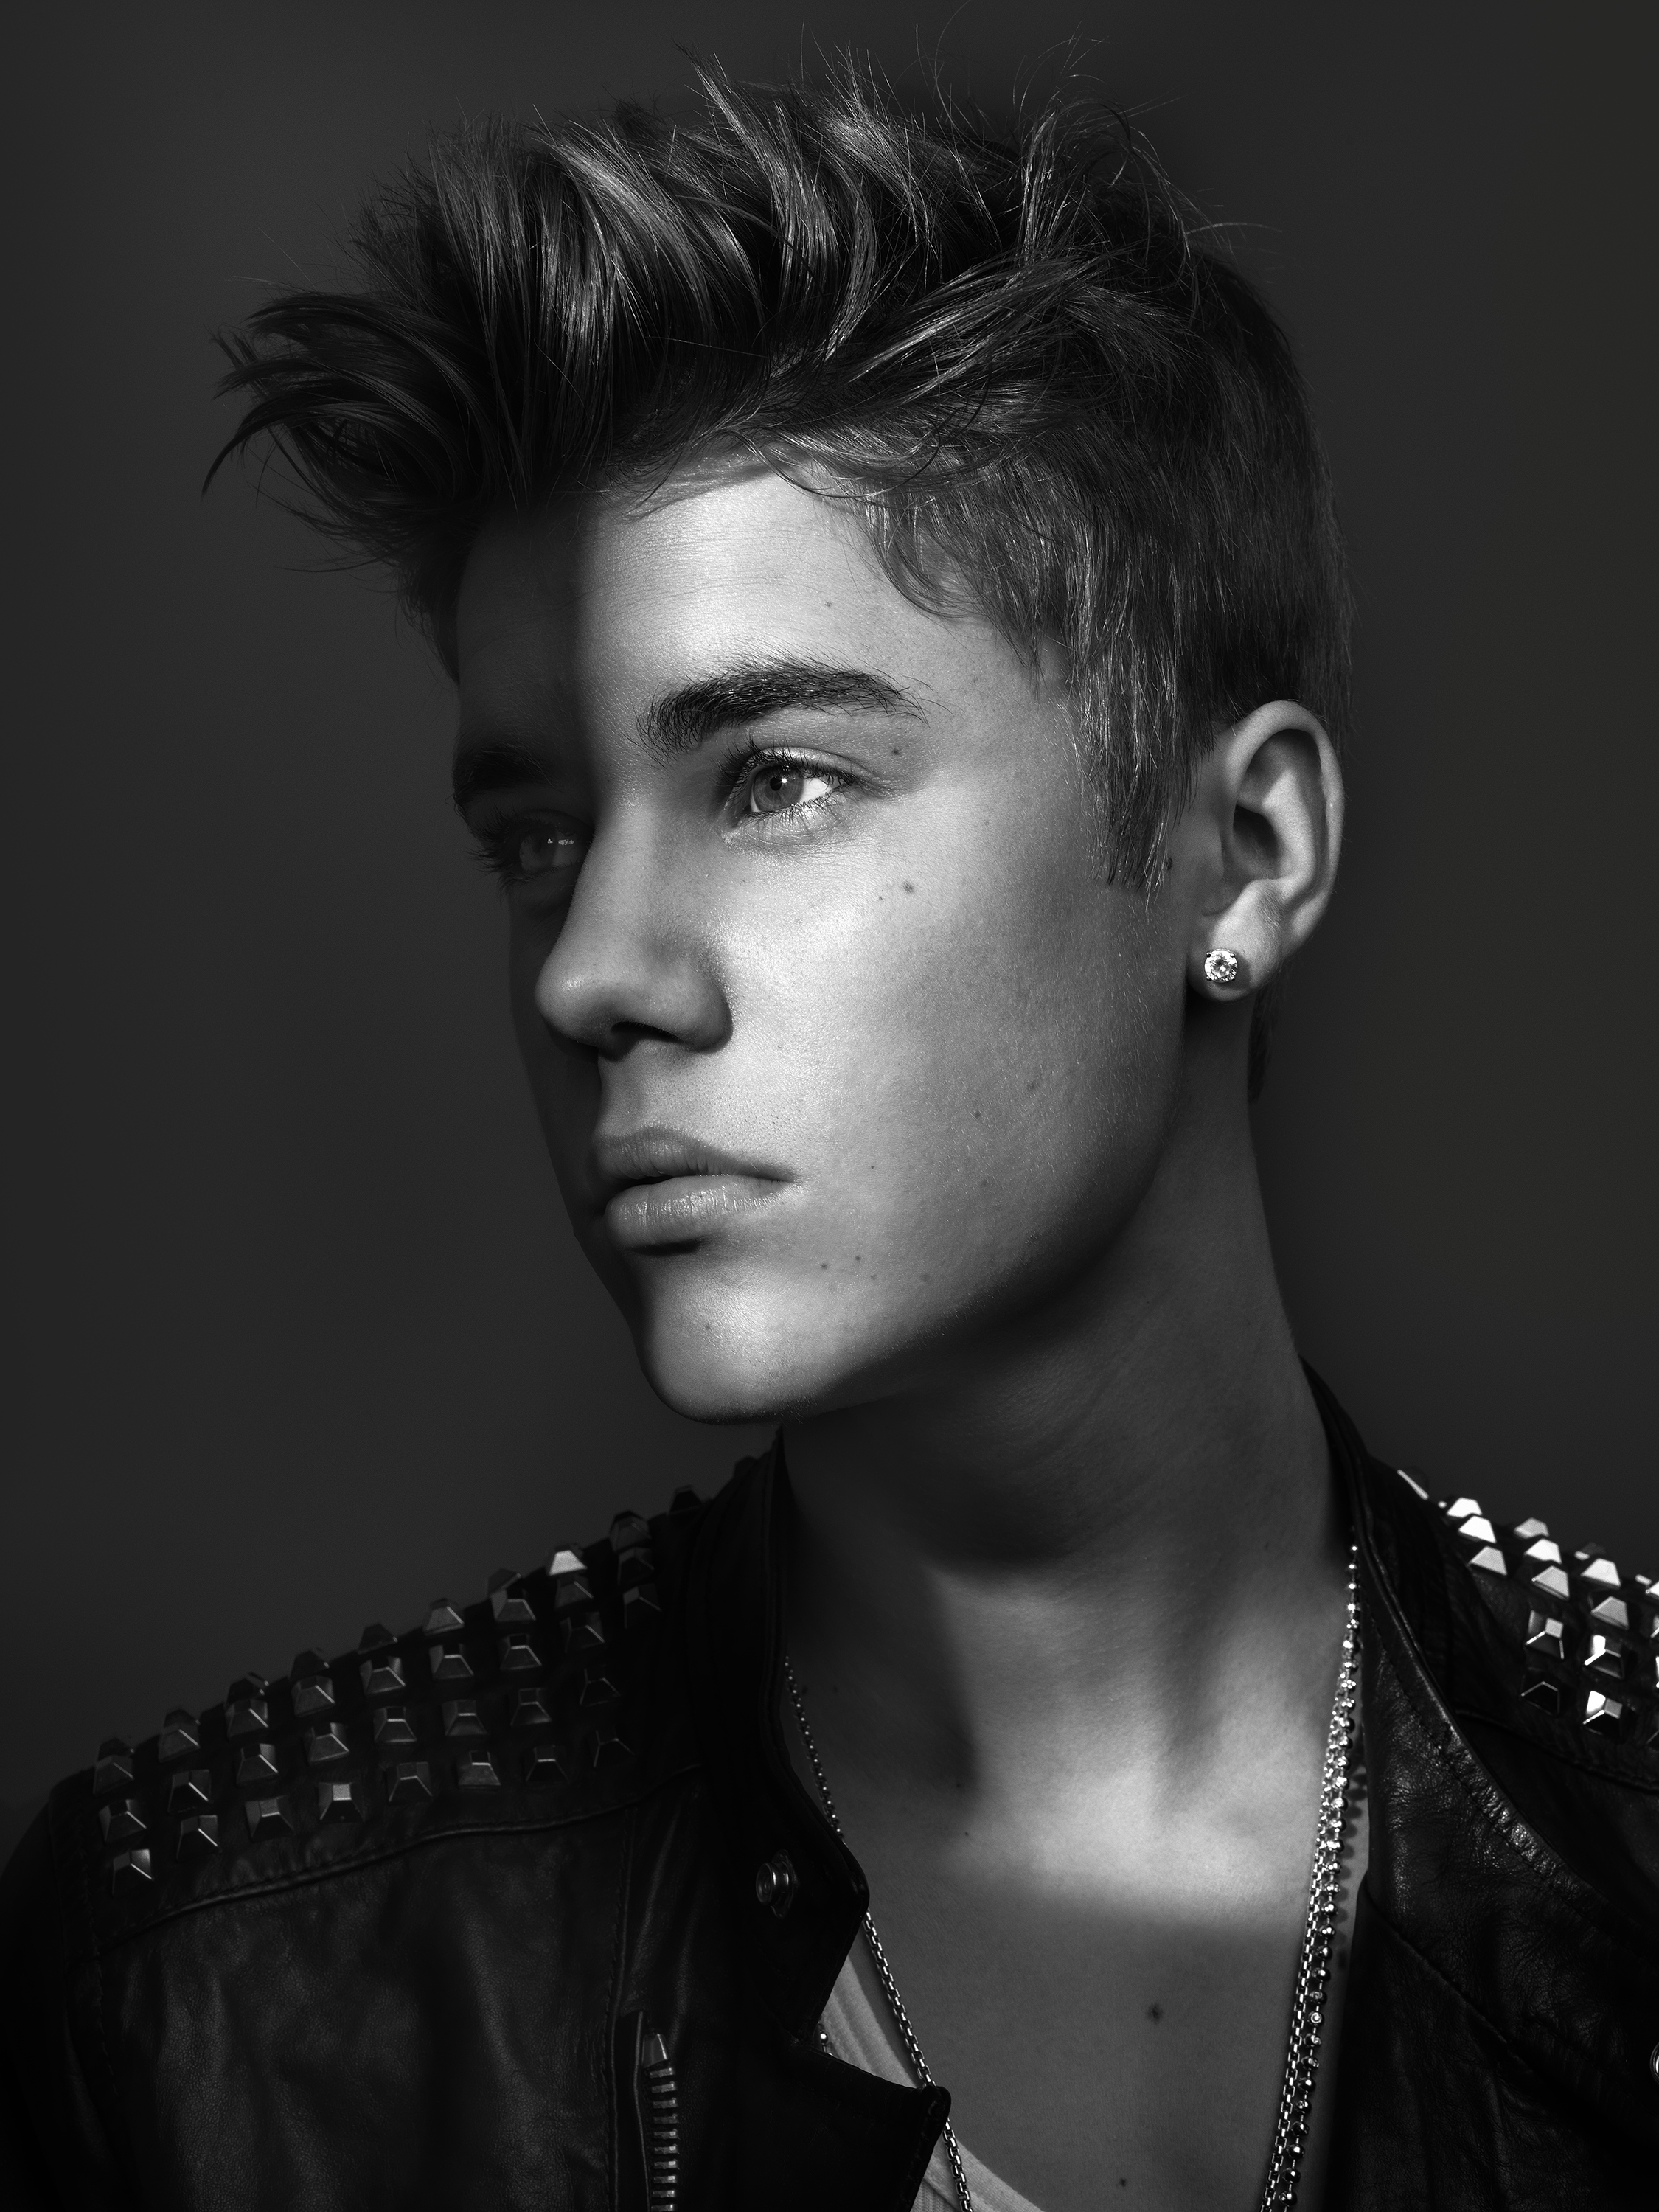 Image - Justin Bieber photoshoot 2012.jpg | Justin Bieber Wiki | FANDOM powered by Wikia